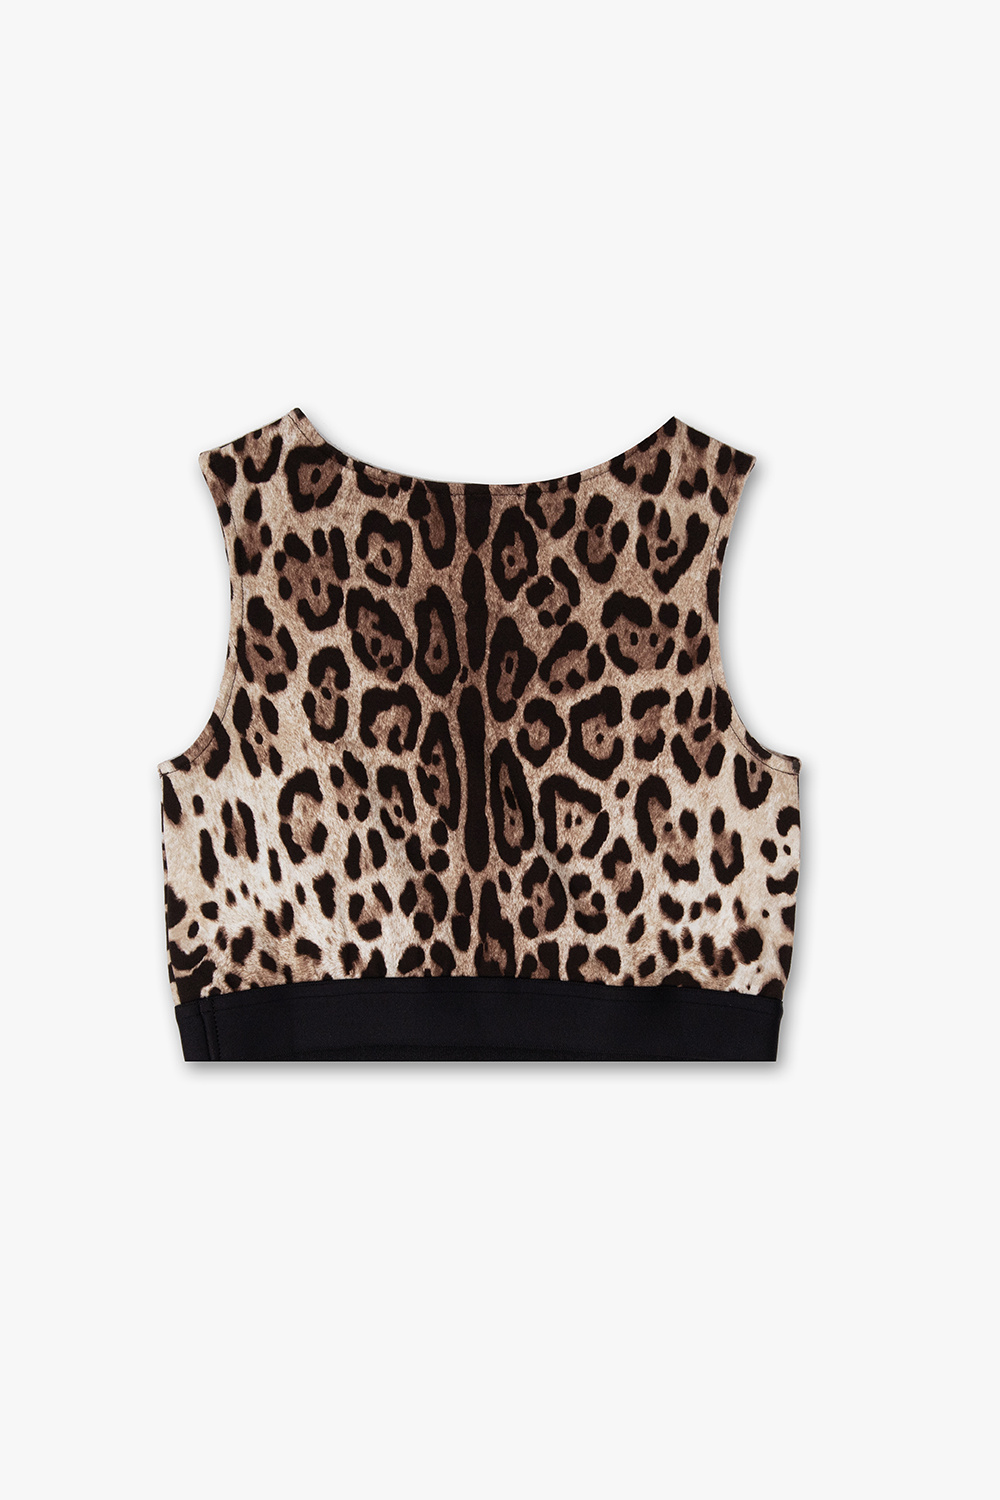 Dolce & Gabbana Kids 2 pack tank top Grey Top with animal pattern